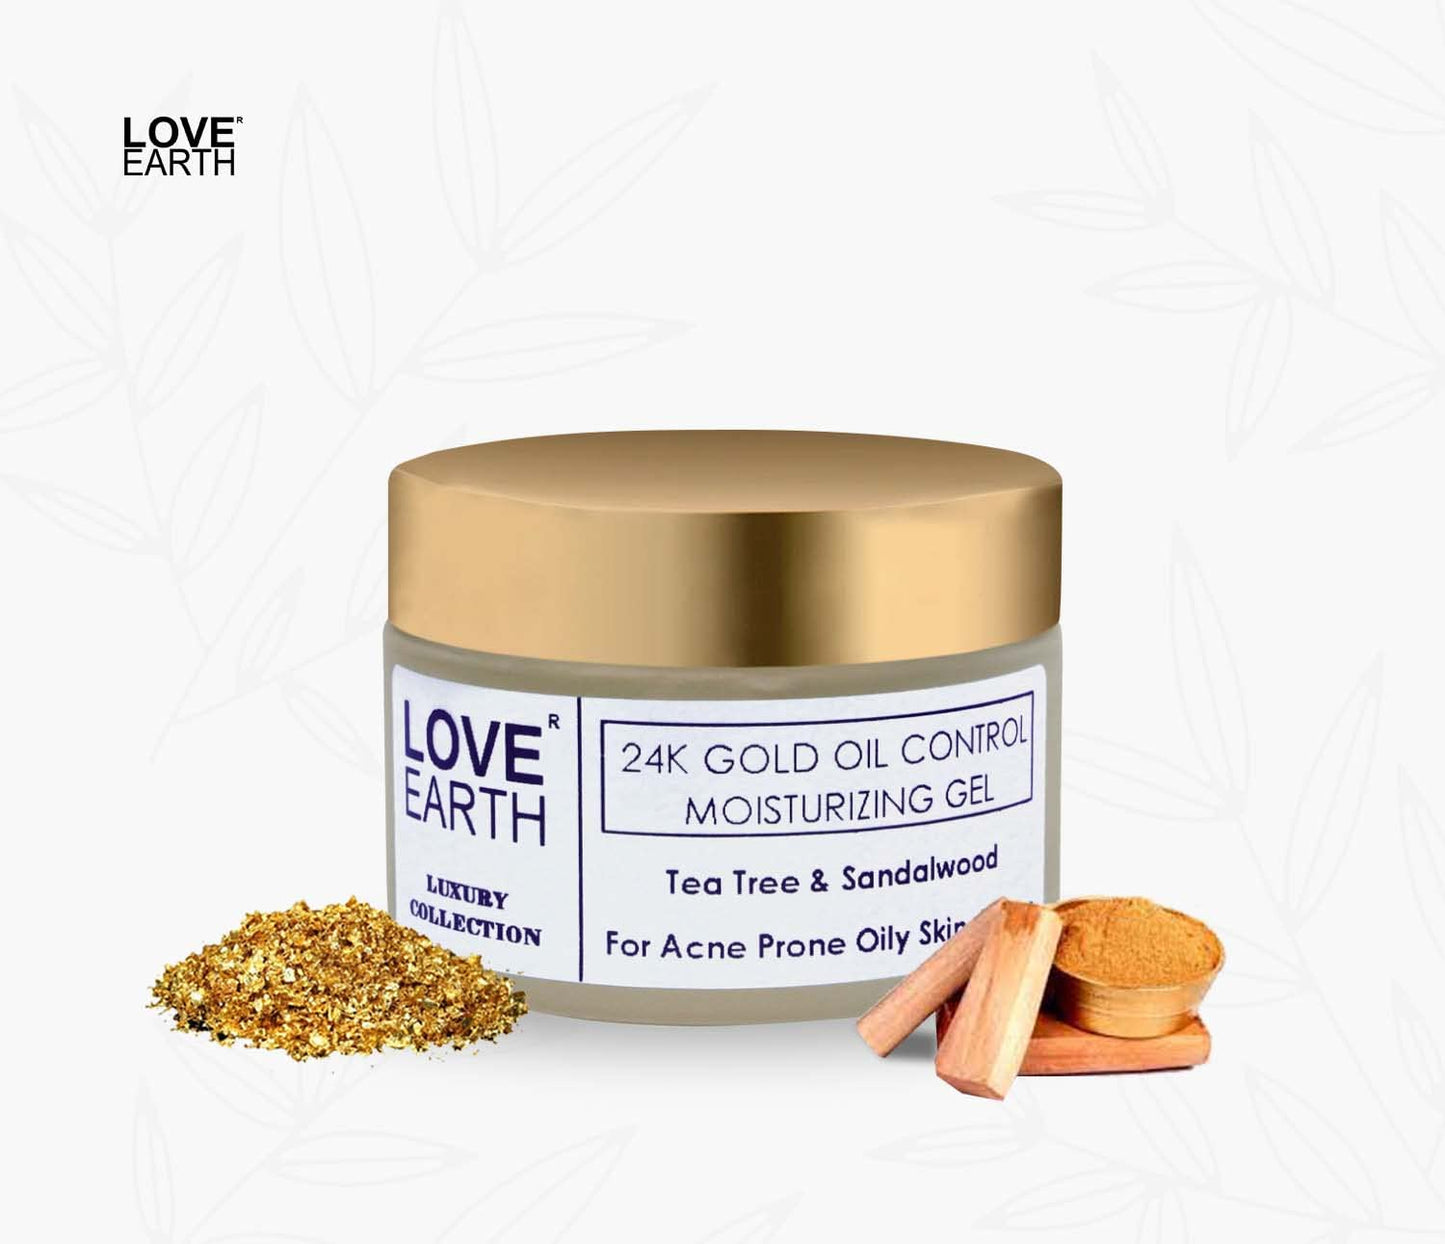 Love Earth 24K Gold Oil Control Moisturizing Gel With Aloe Vera & Sandalwood Extract